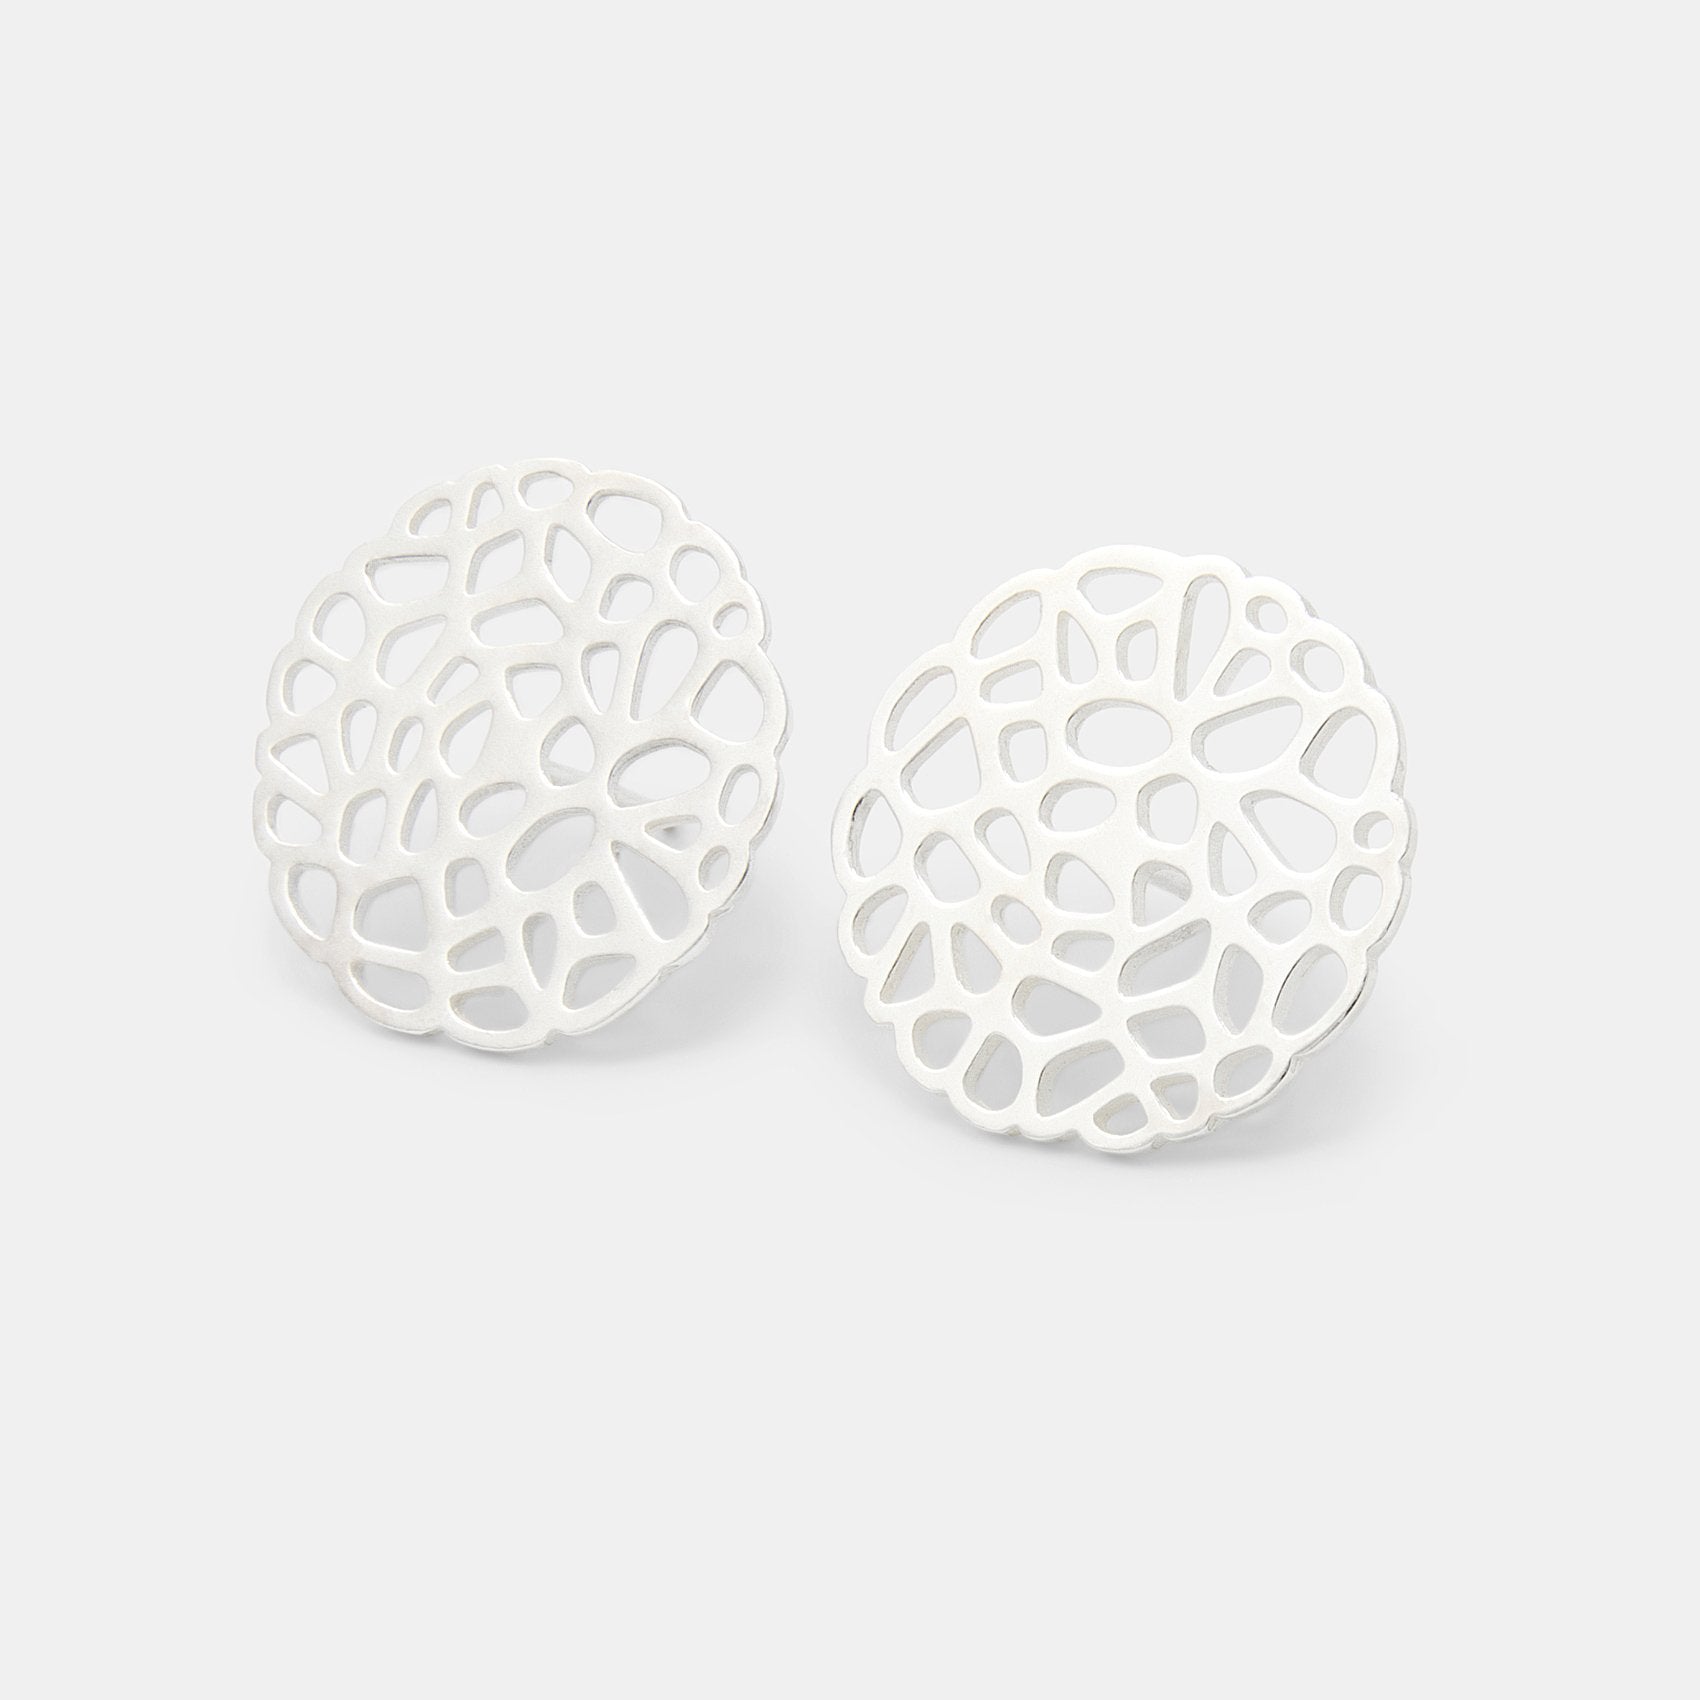 Coral silver button earrings - Simone Walsh Jewellery Australia